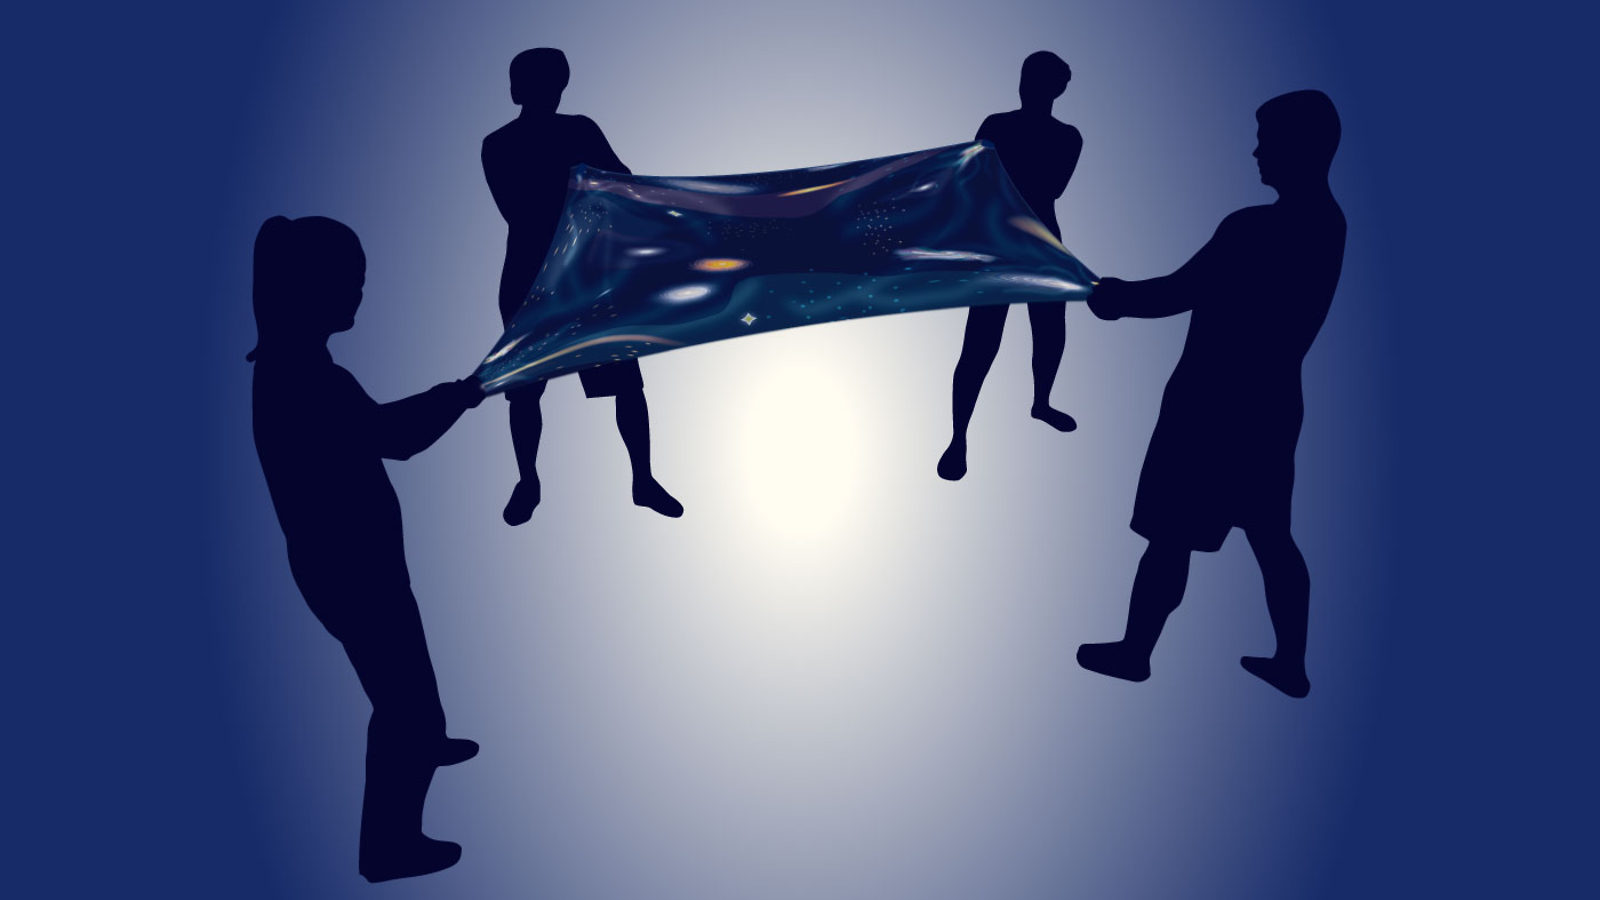 Illustration of four people holding four corner of a dark energy blanket